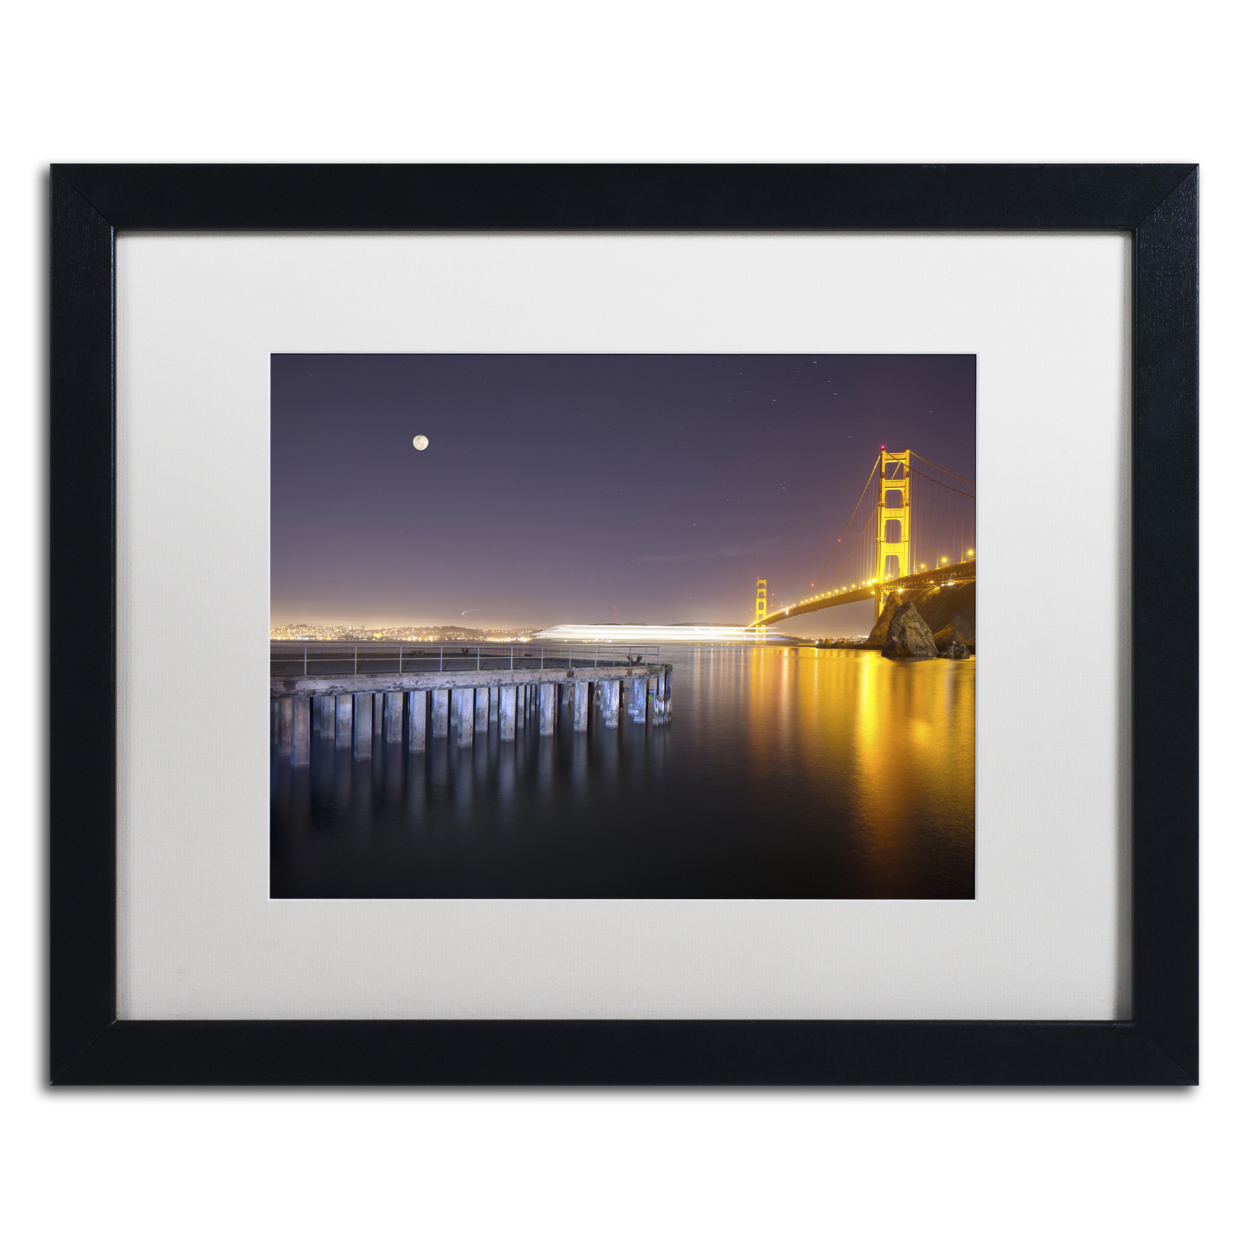 Moises Levy 'Golden Gate Pier And Stars' Black Wooden Framed Art 18 X 22 Inches